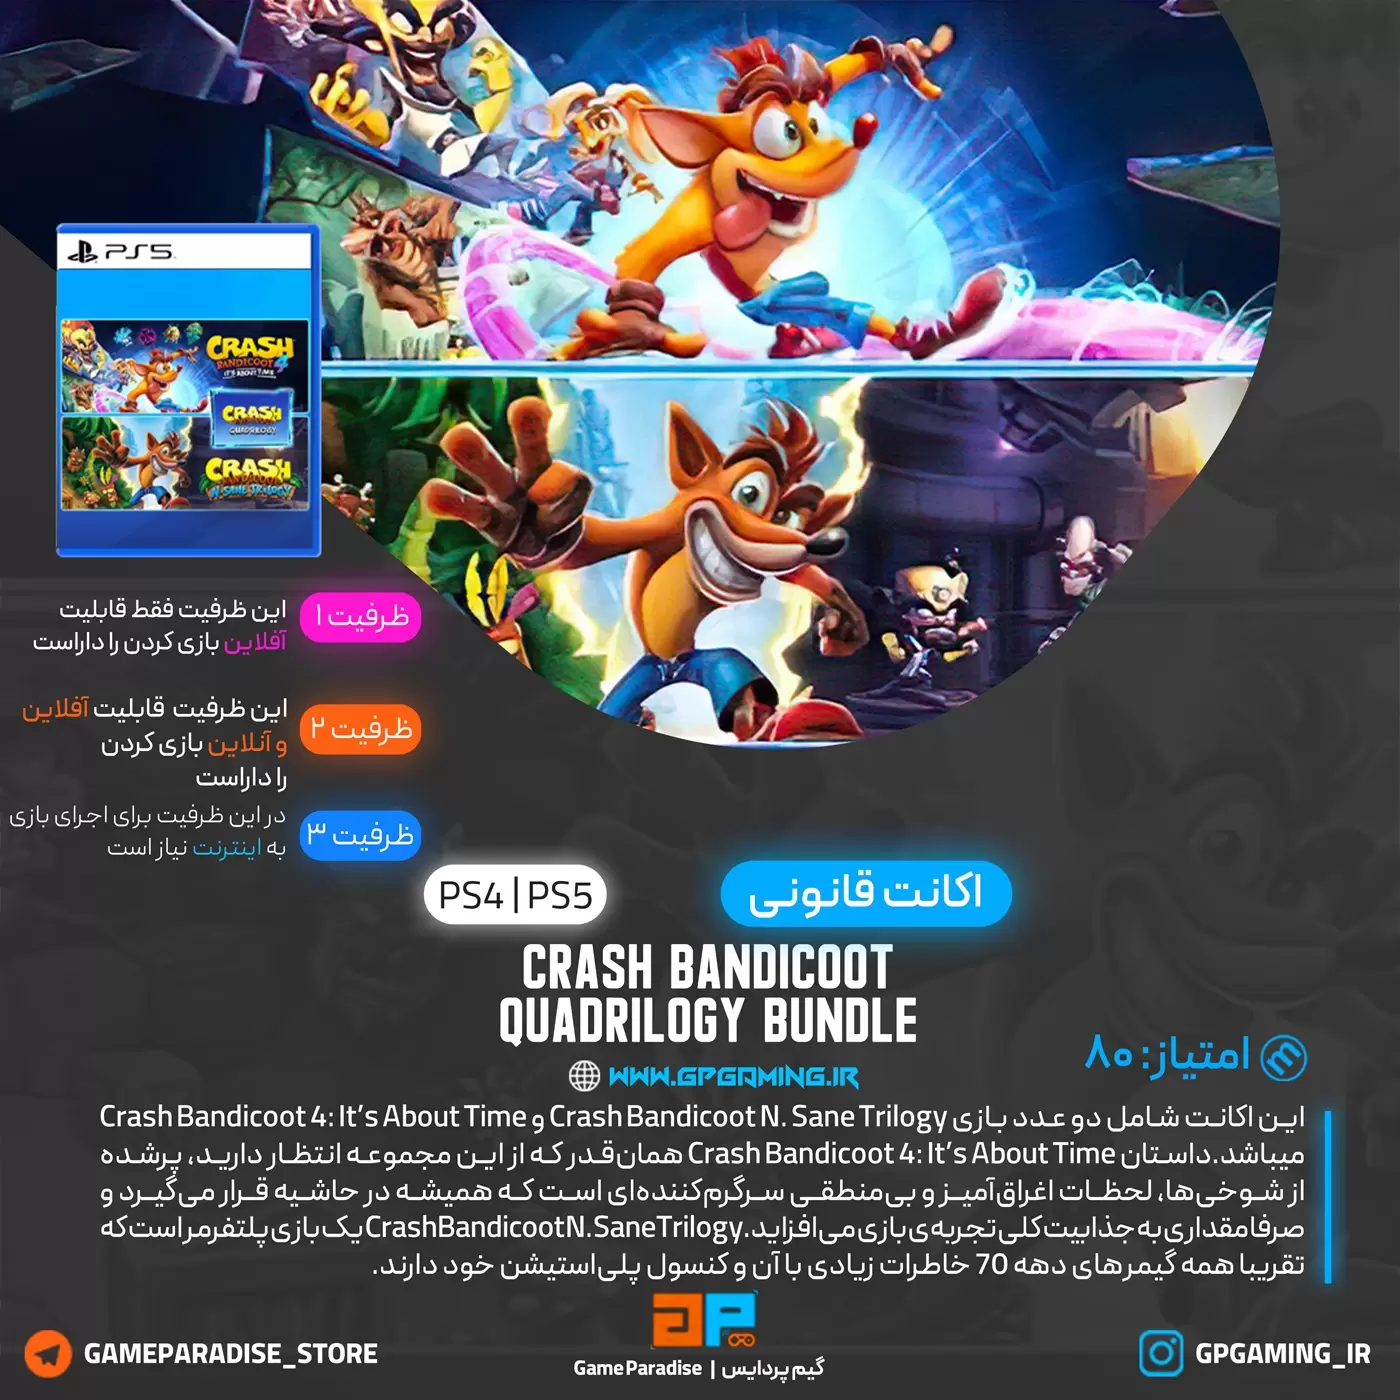 Crash Bandicoot - Quadrilogy Bundle